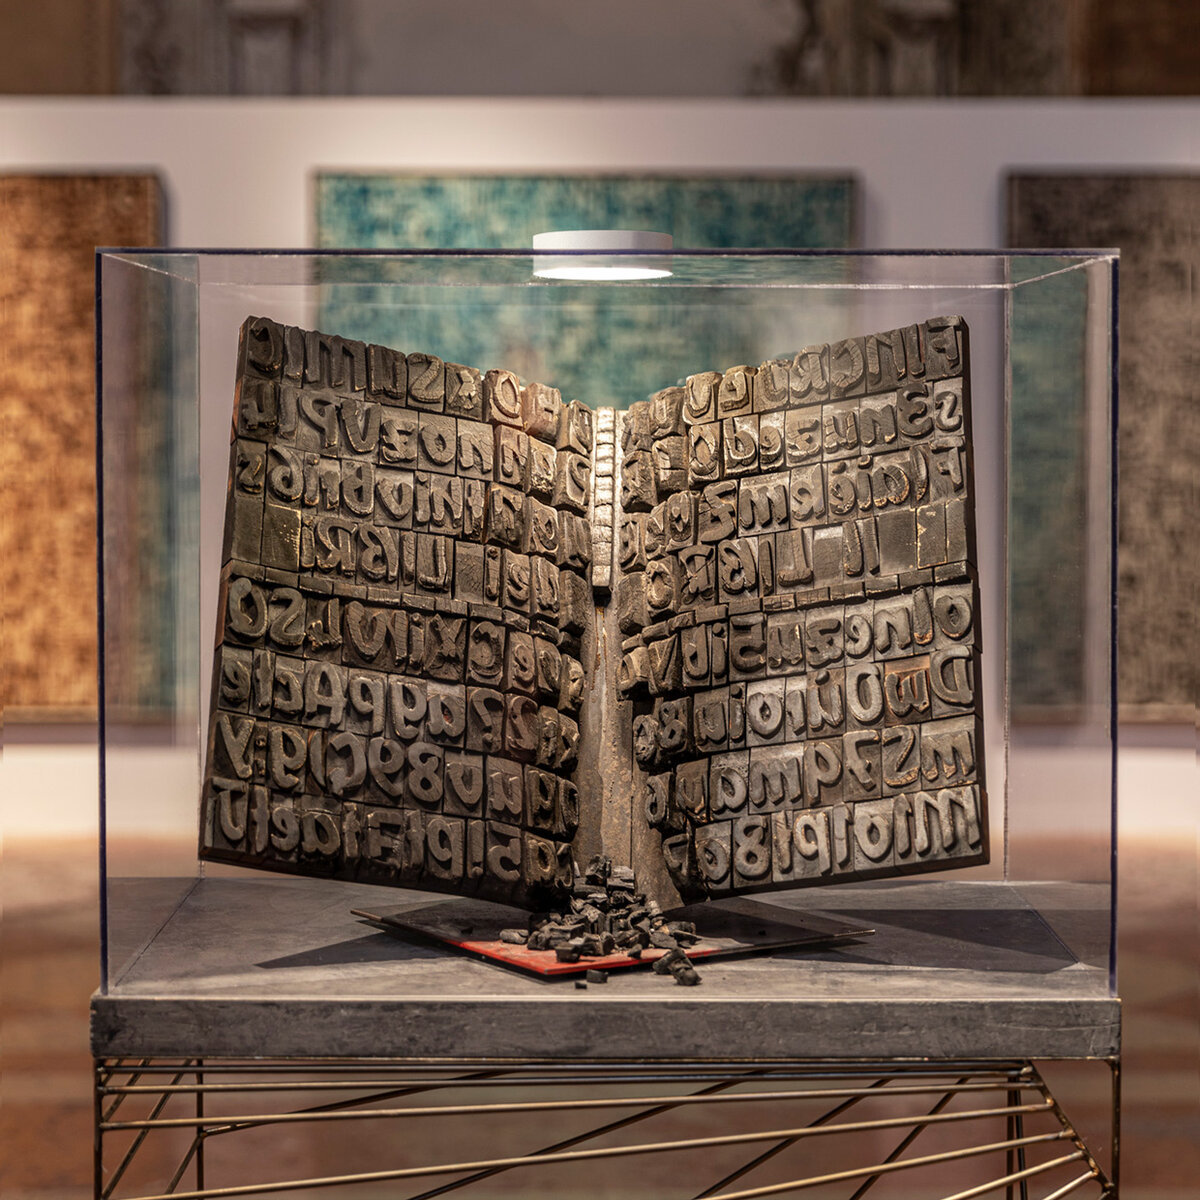 Exposición «La Scrittura come Enigma» | © Davide Groppi srl | All Rights Reserved